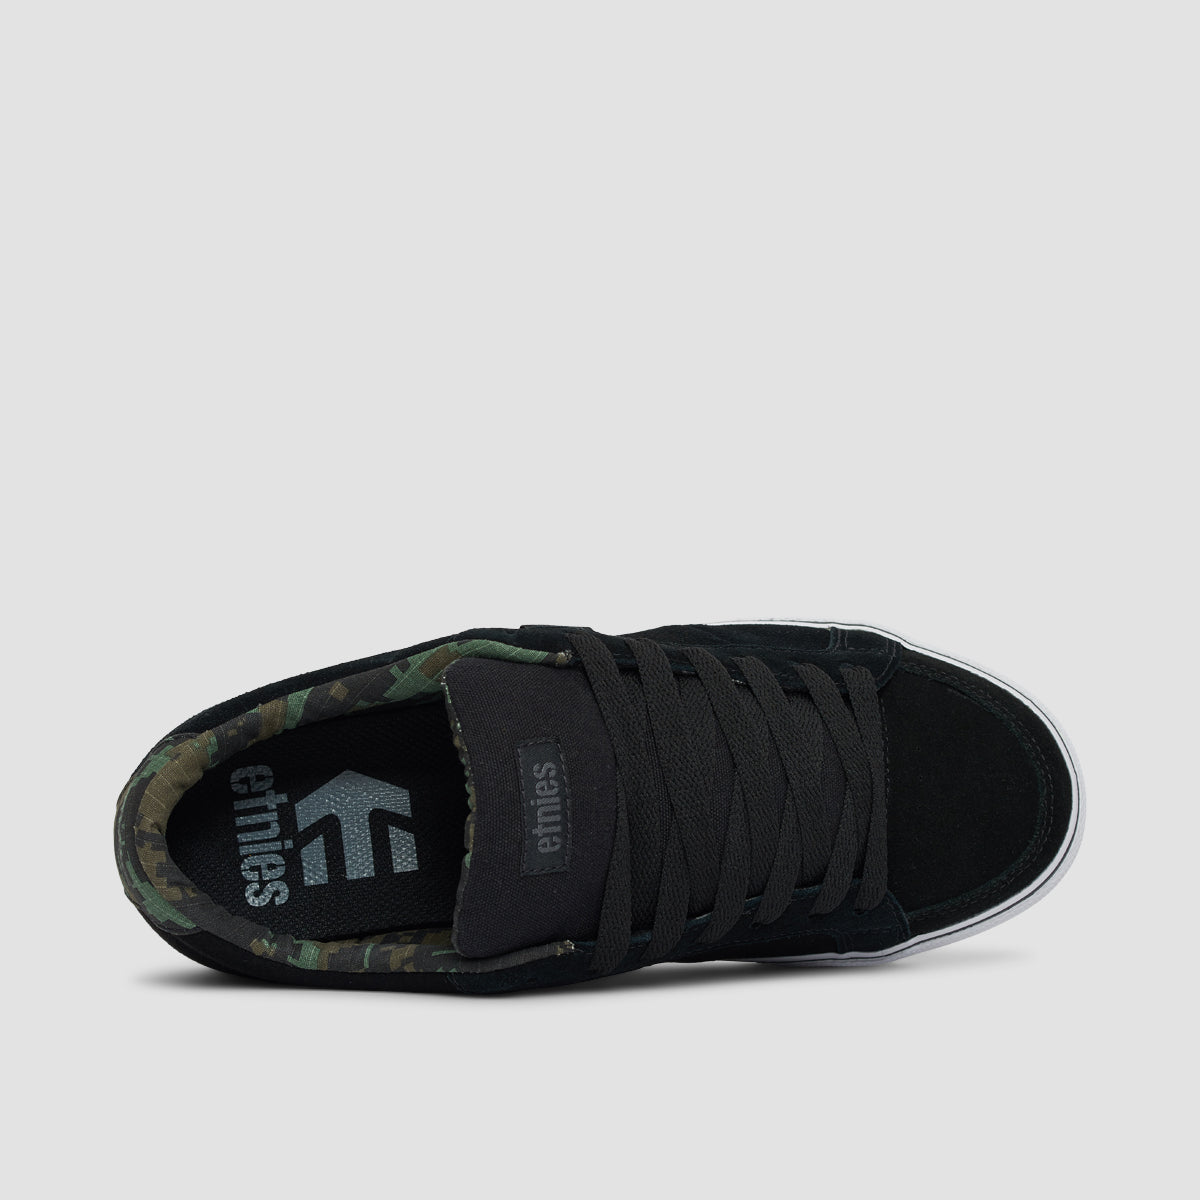 Etnies Kingpin Vulc Shoes - Black/Camo